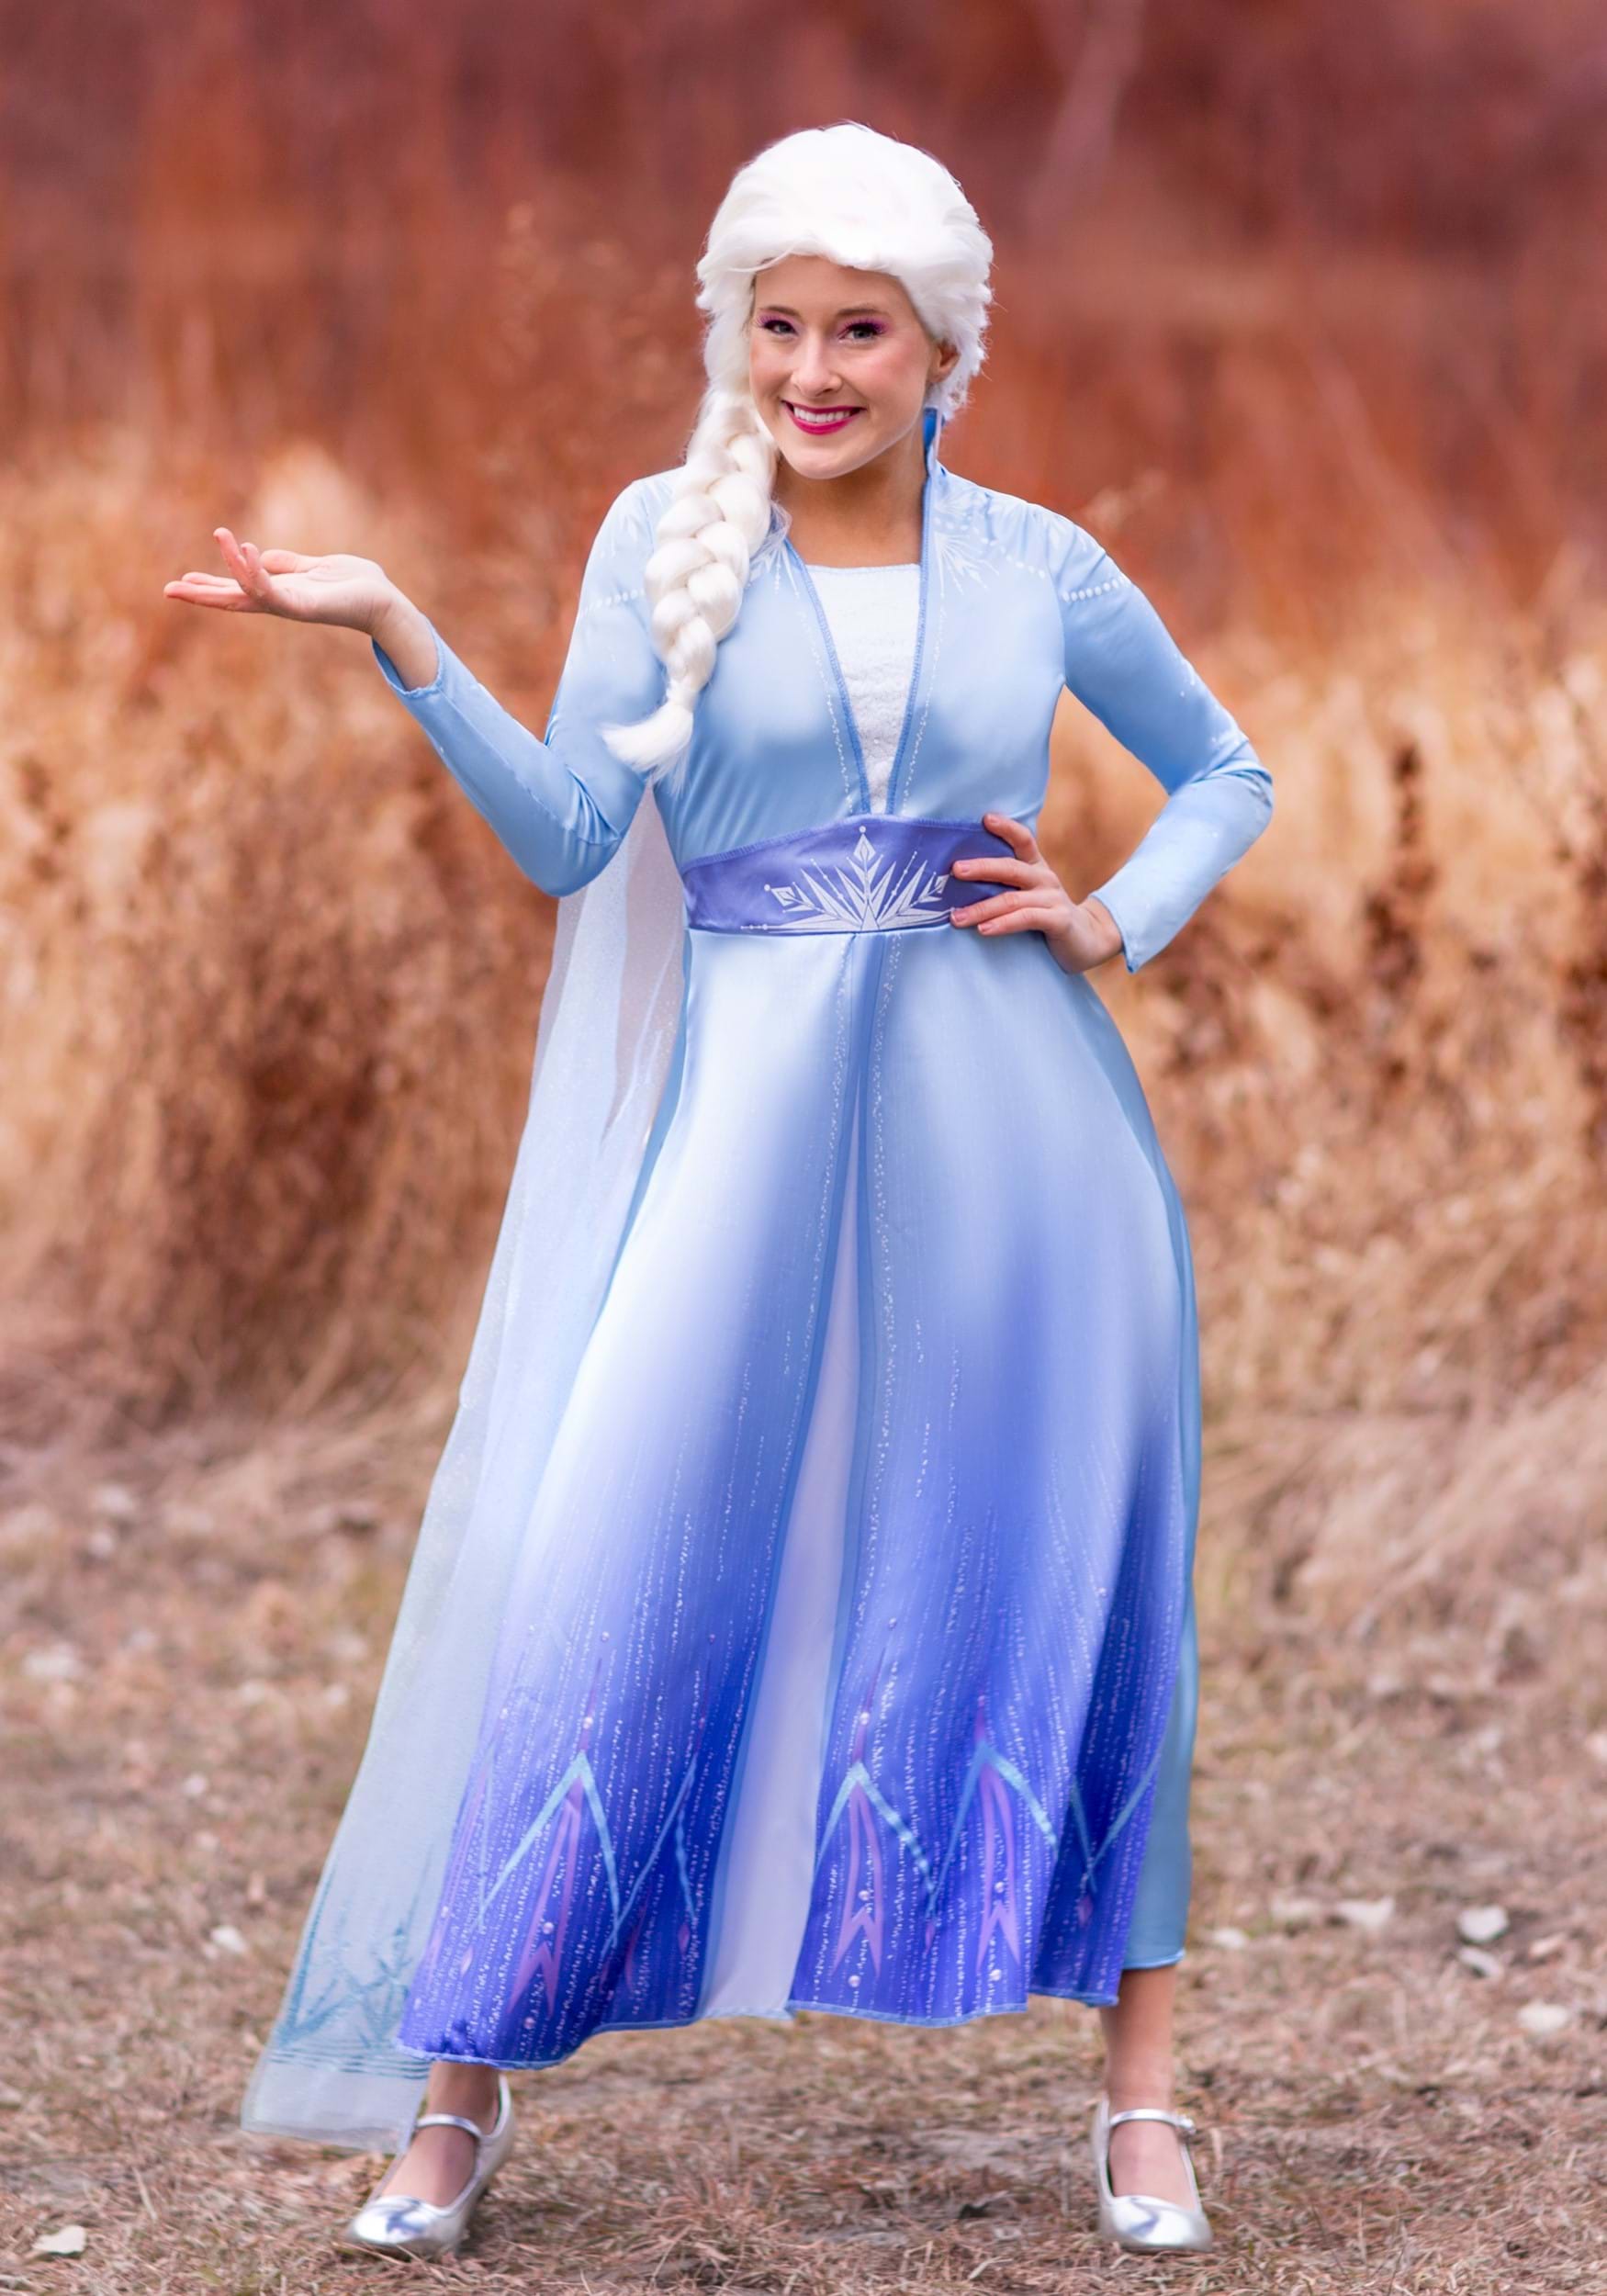 Disguise Women's Disney Frozen 2 Elsa Prestige Adult Costume